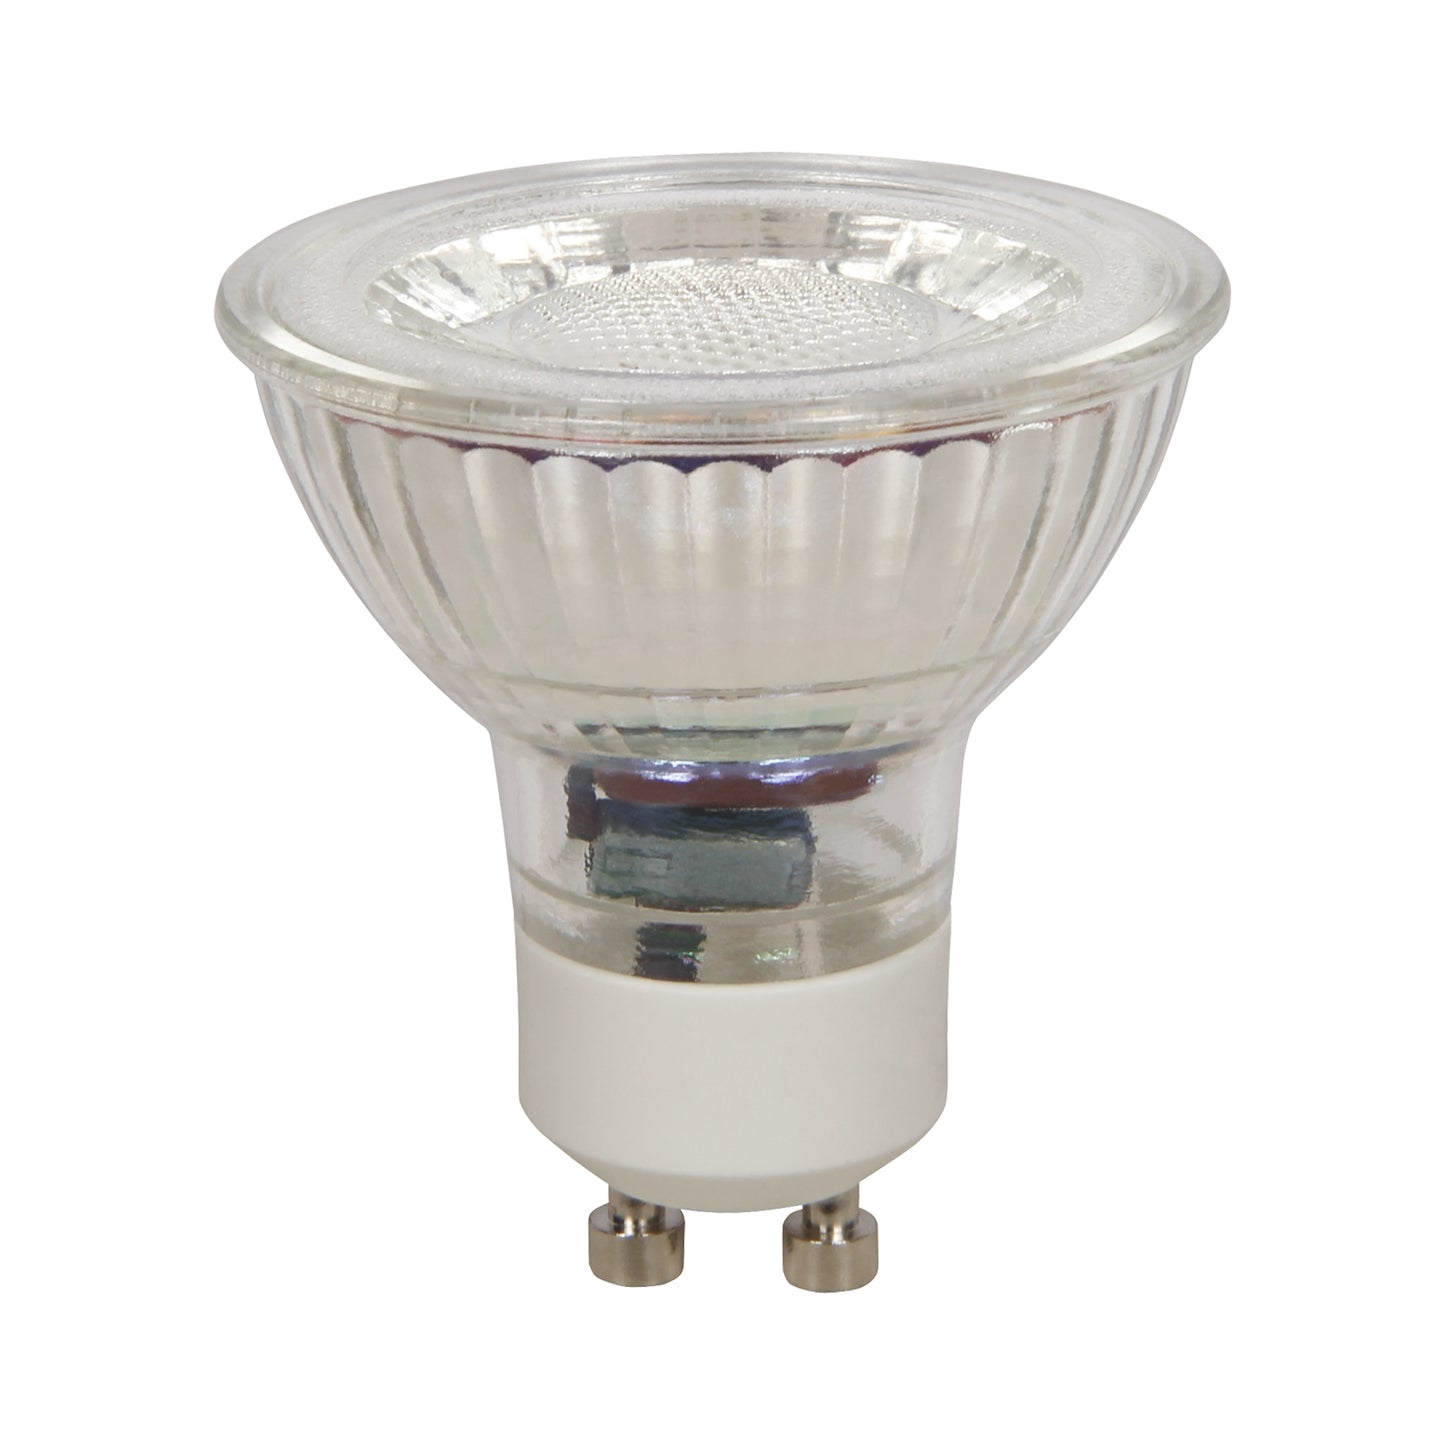 10x LED Leuchtmittel GU10 5W Warmweiß 230V Set Leuchte Strahler Reflektorlampe